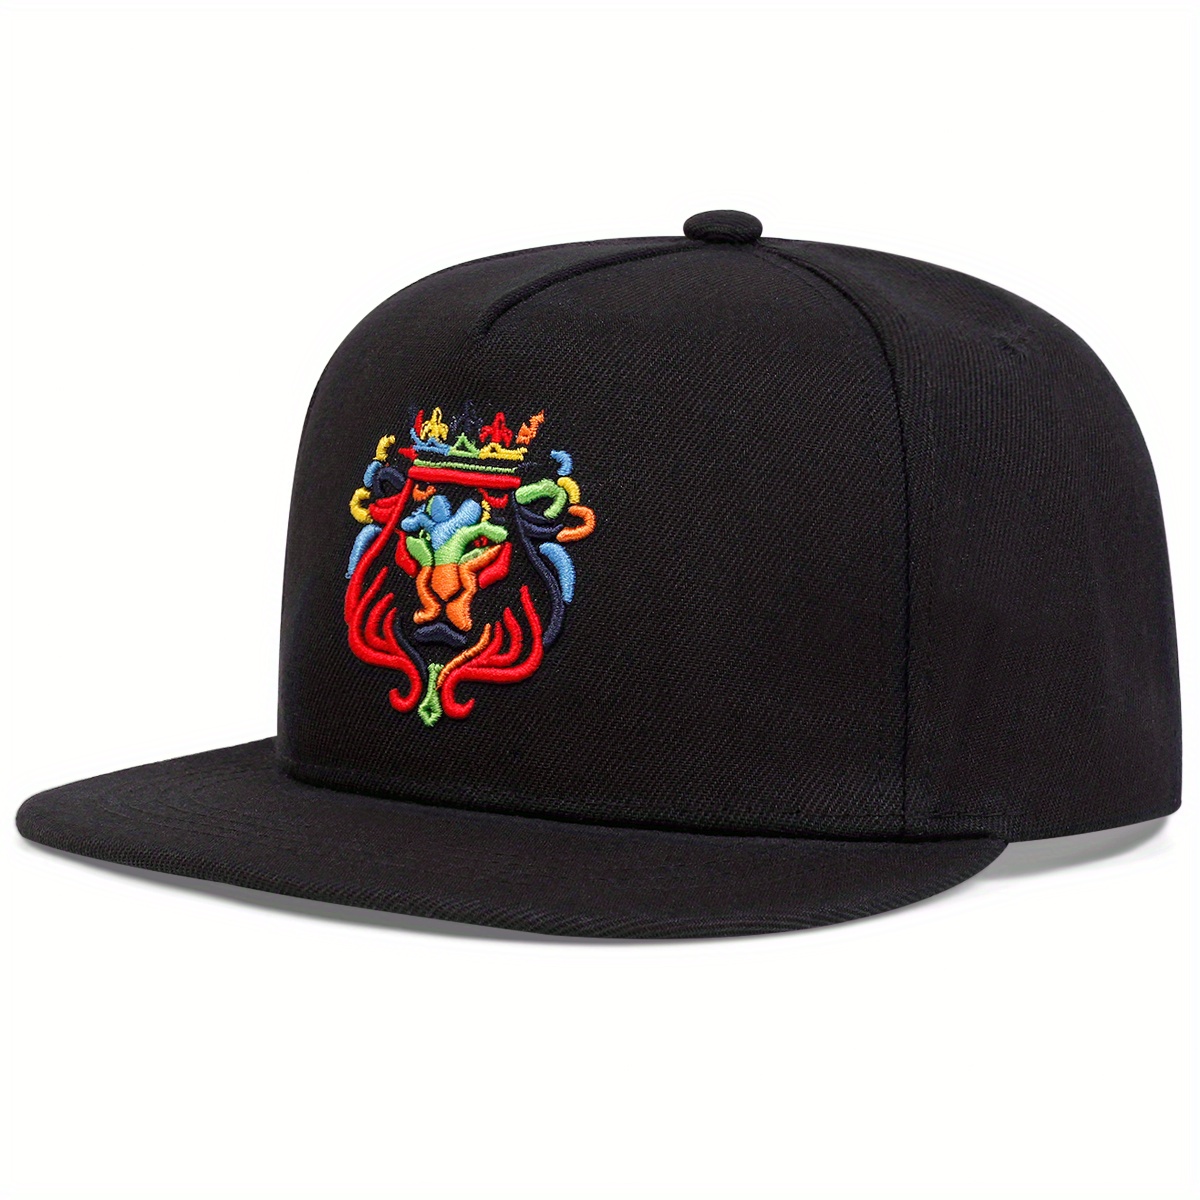 Trucker Hat for Men red Crown Print Mesh Back Baseball Cap Adjustable Fit  for Outdoor Sports